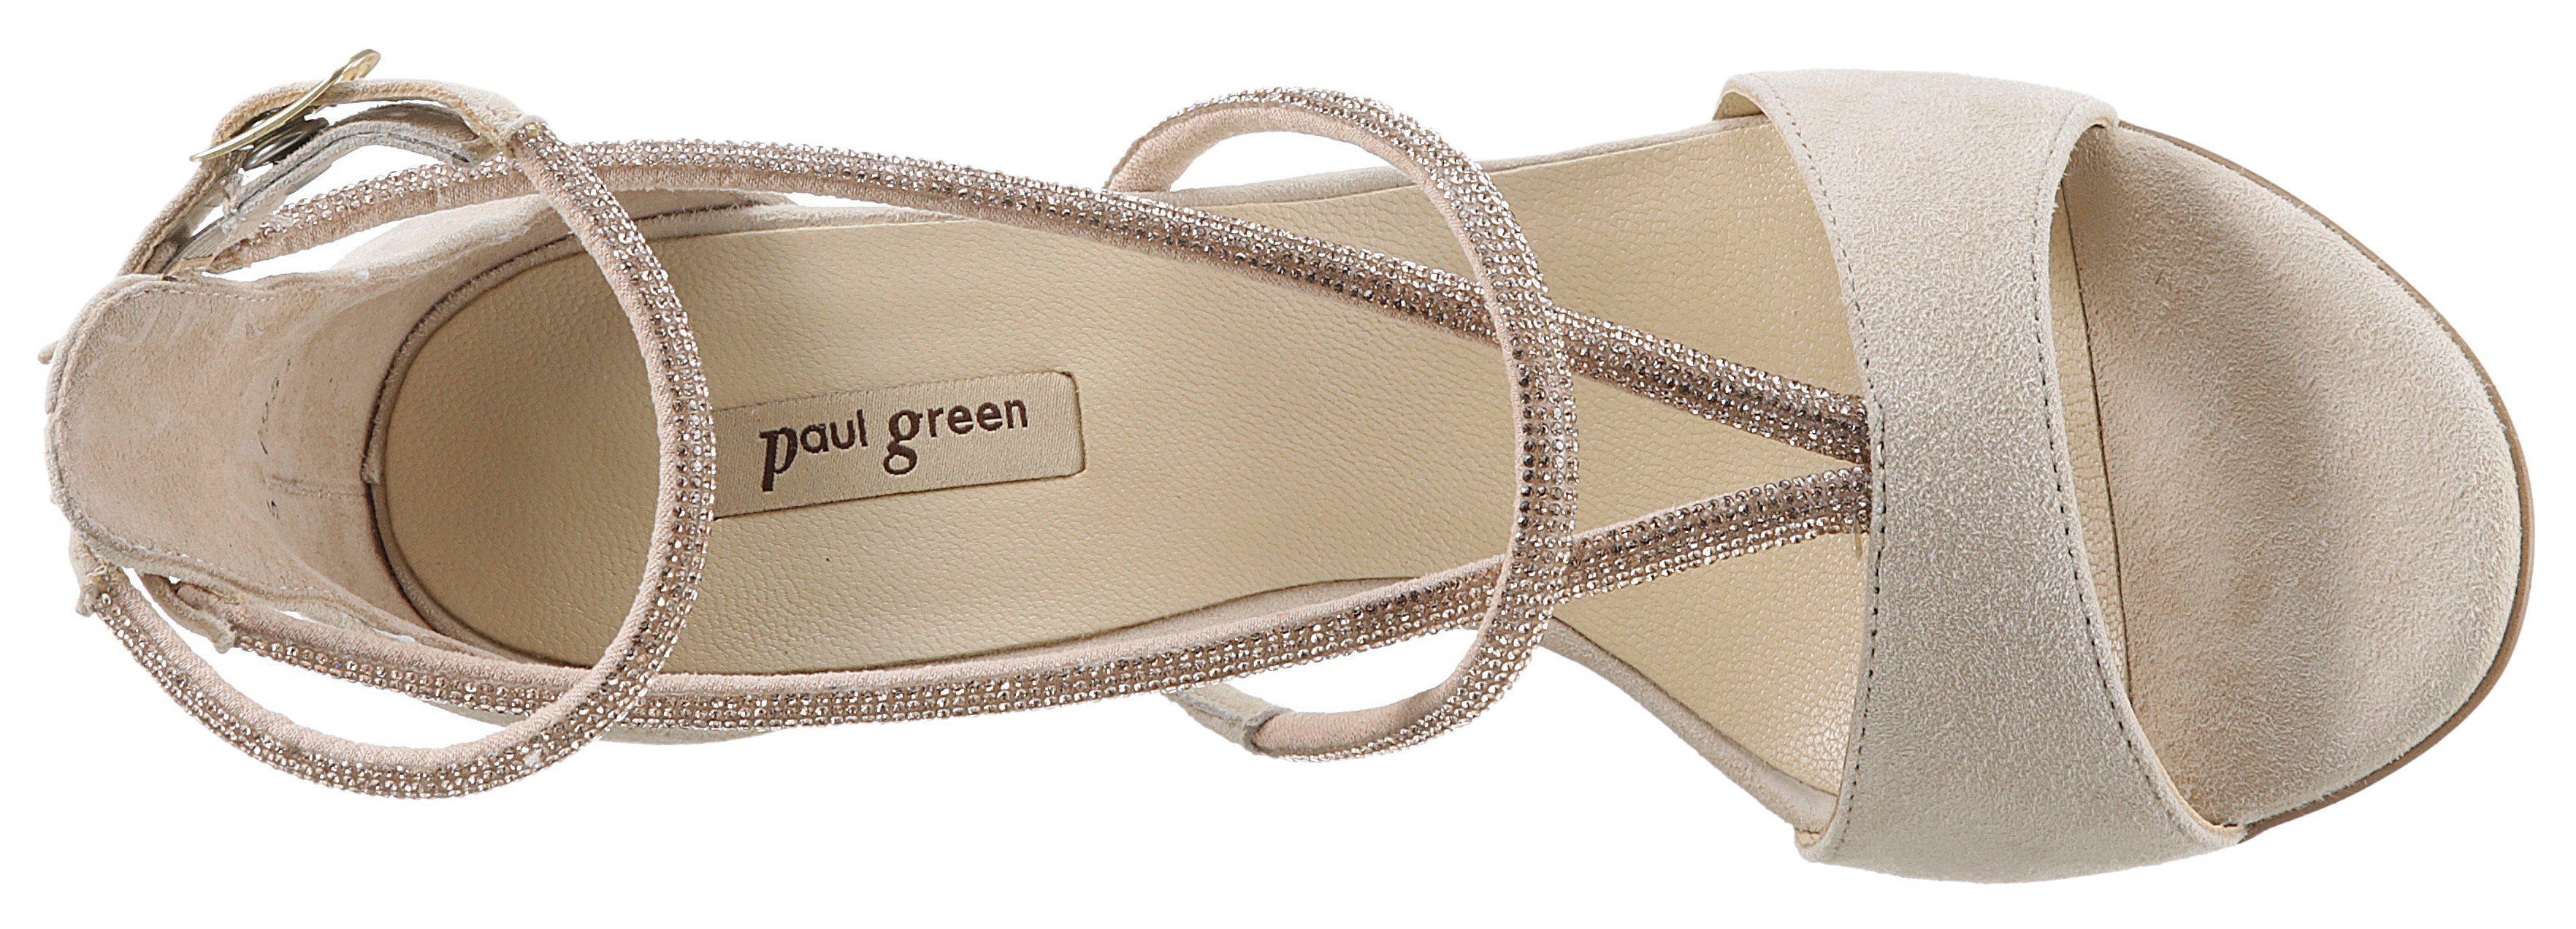 Sandalette Optik Green Paul beige in eleganter